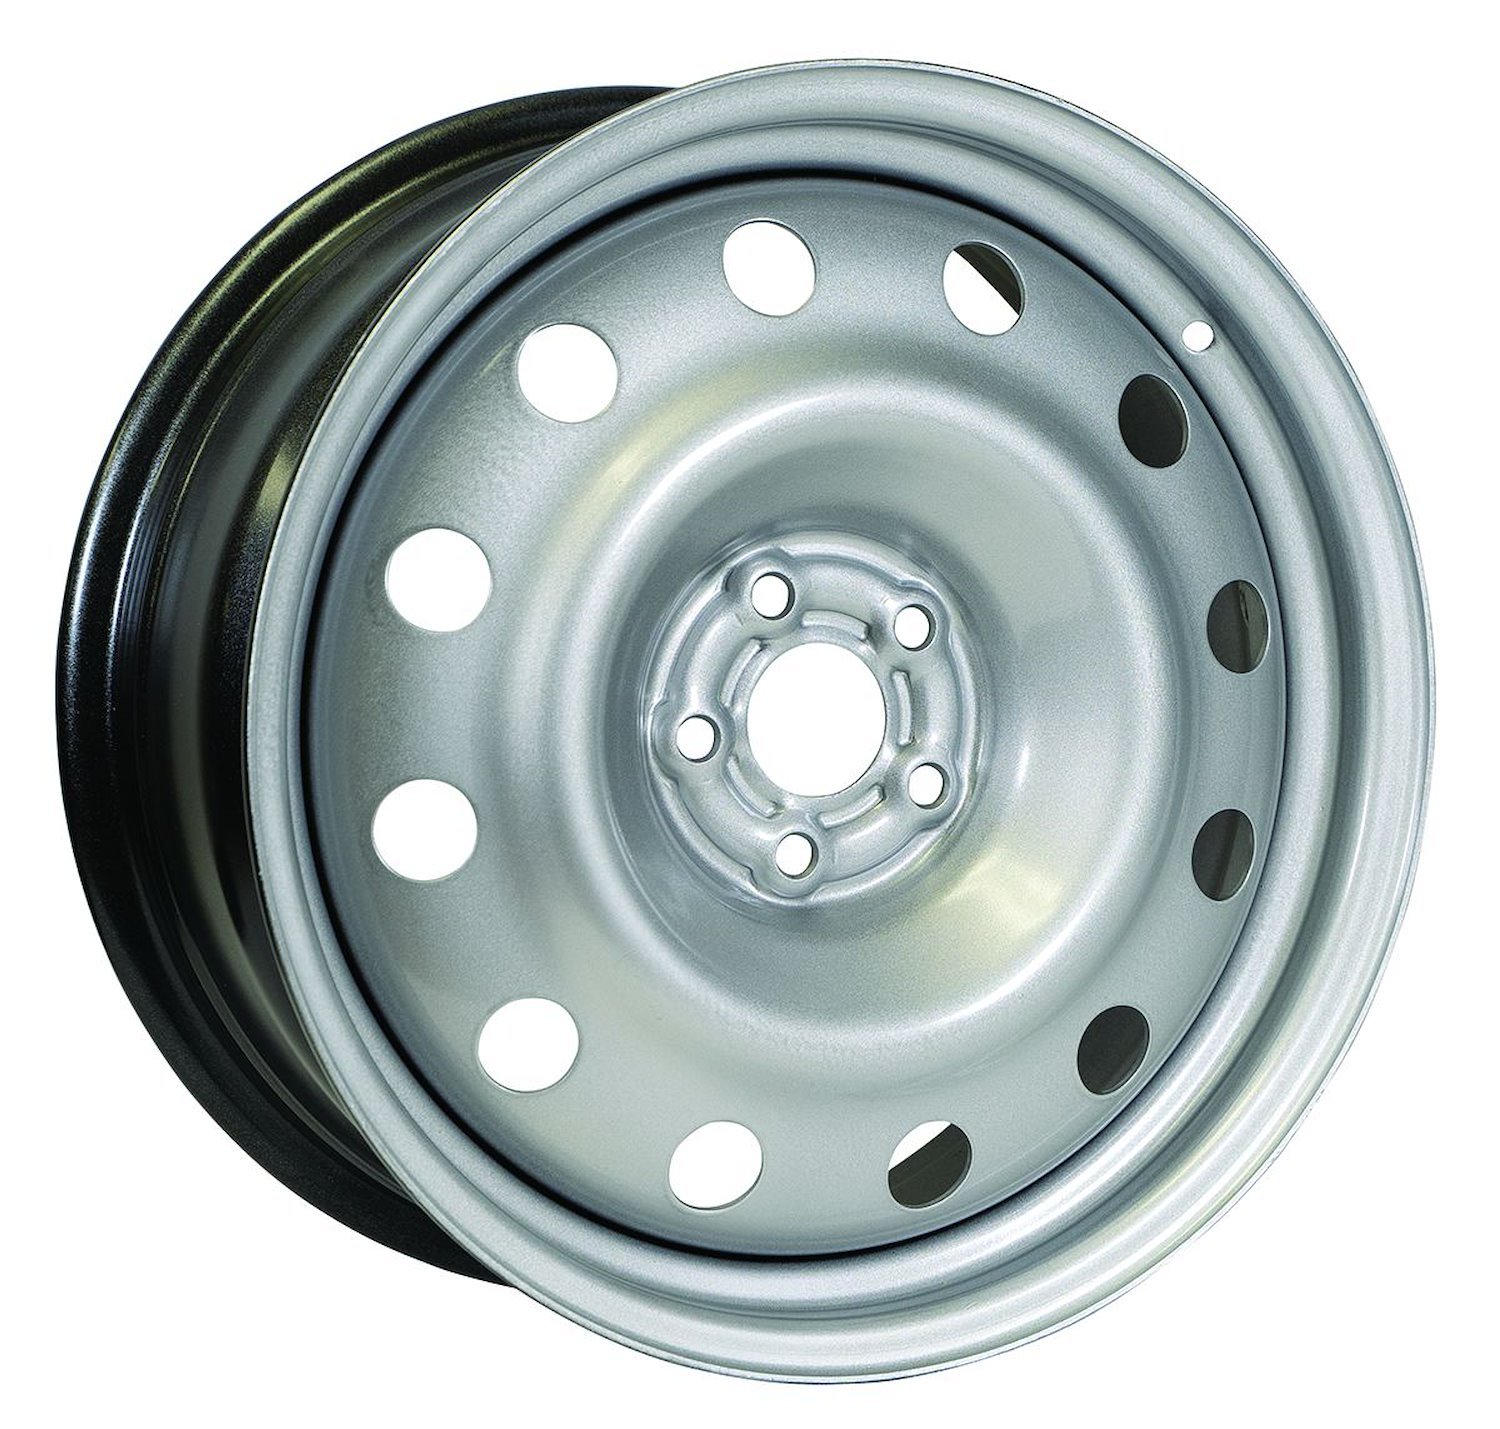 X47556 Steel Wheel [Size: 17" x 7"] Grey Finish